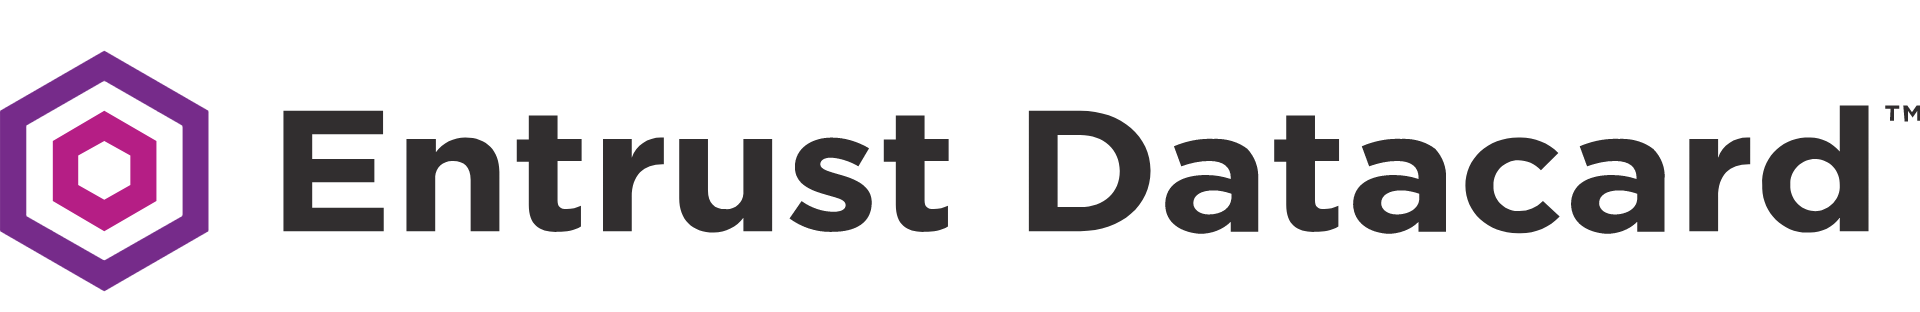 Entrust Datacard Logo.png